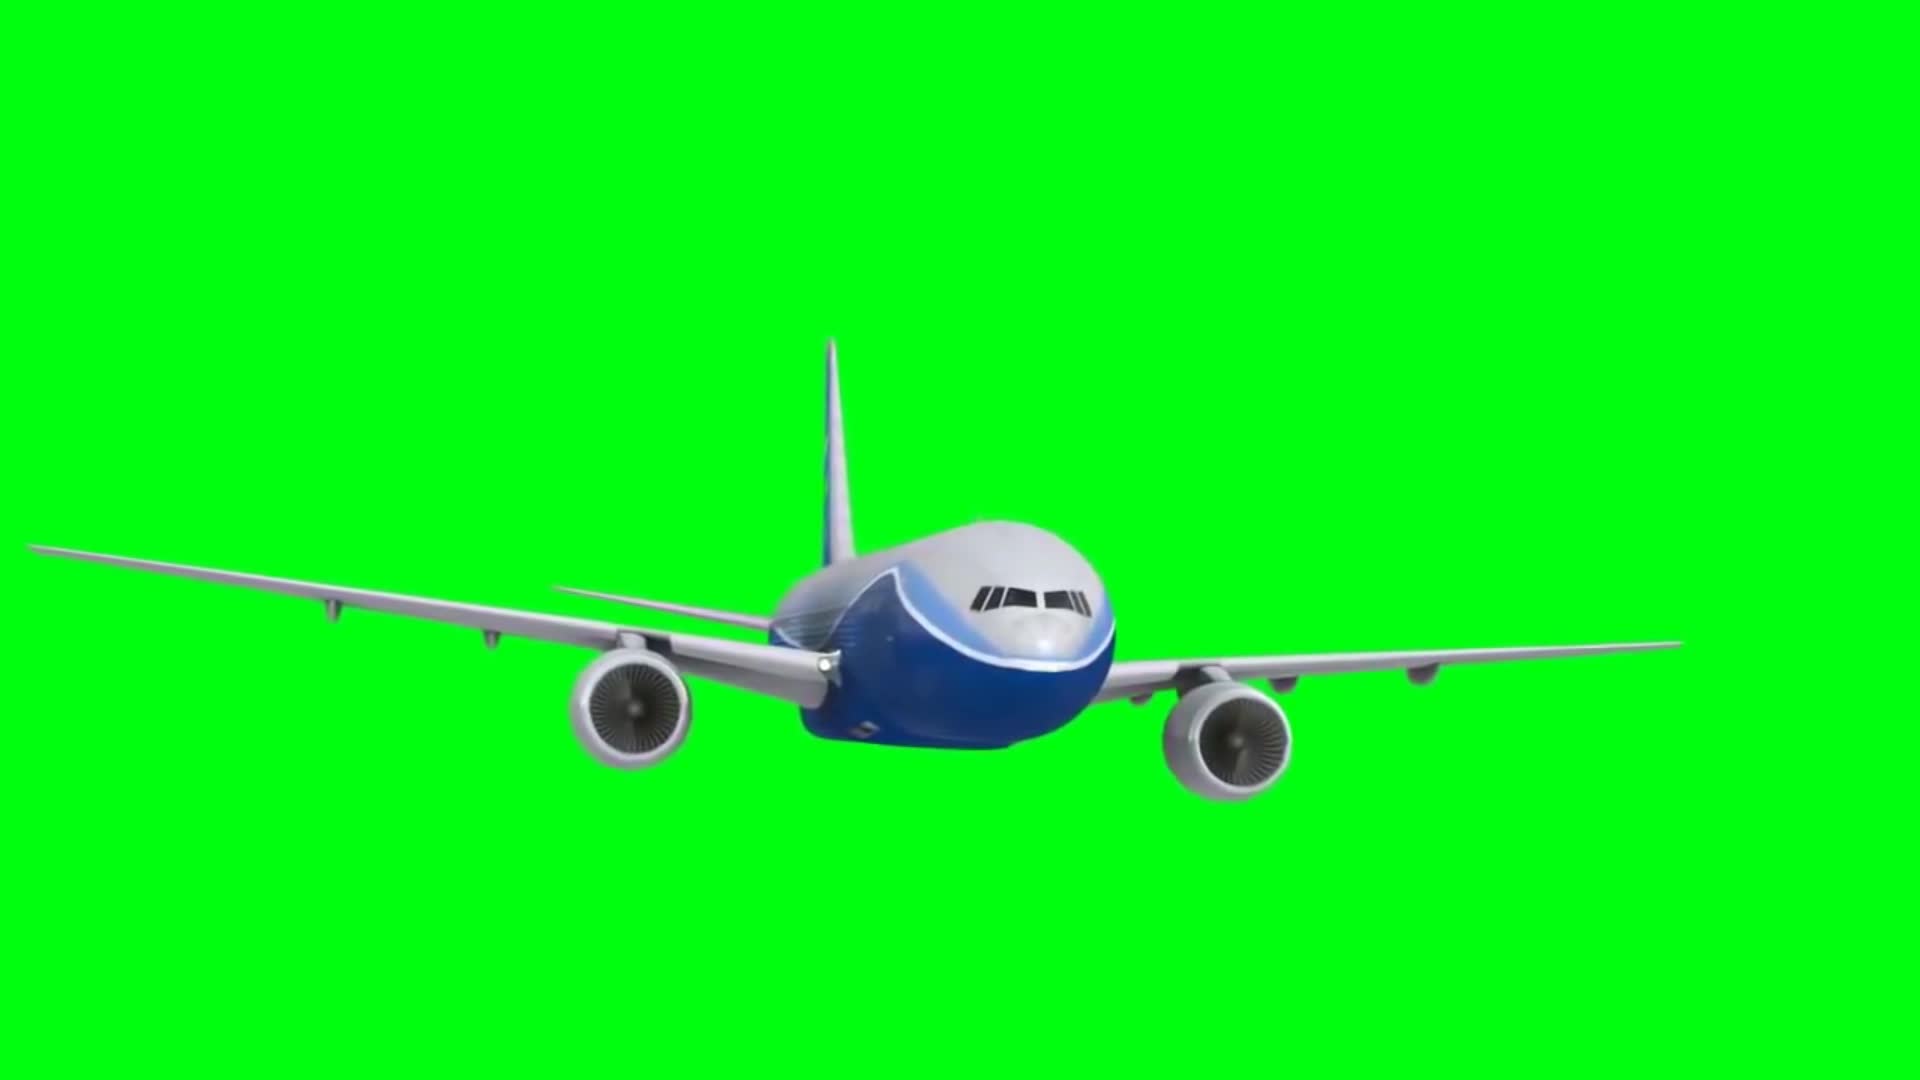 descarga gratuita de video de pantalla verde de avión 3559901 Vídeo de  stock en Vecteezy